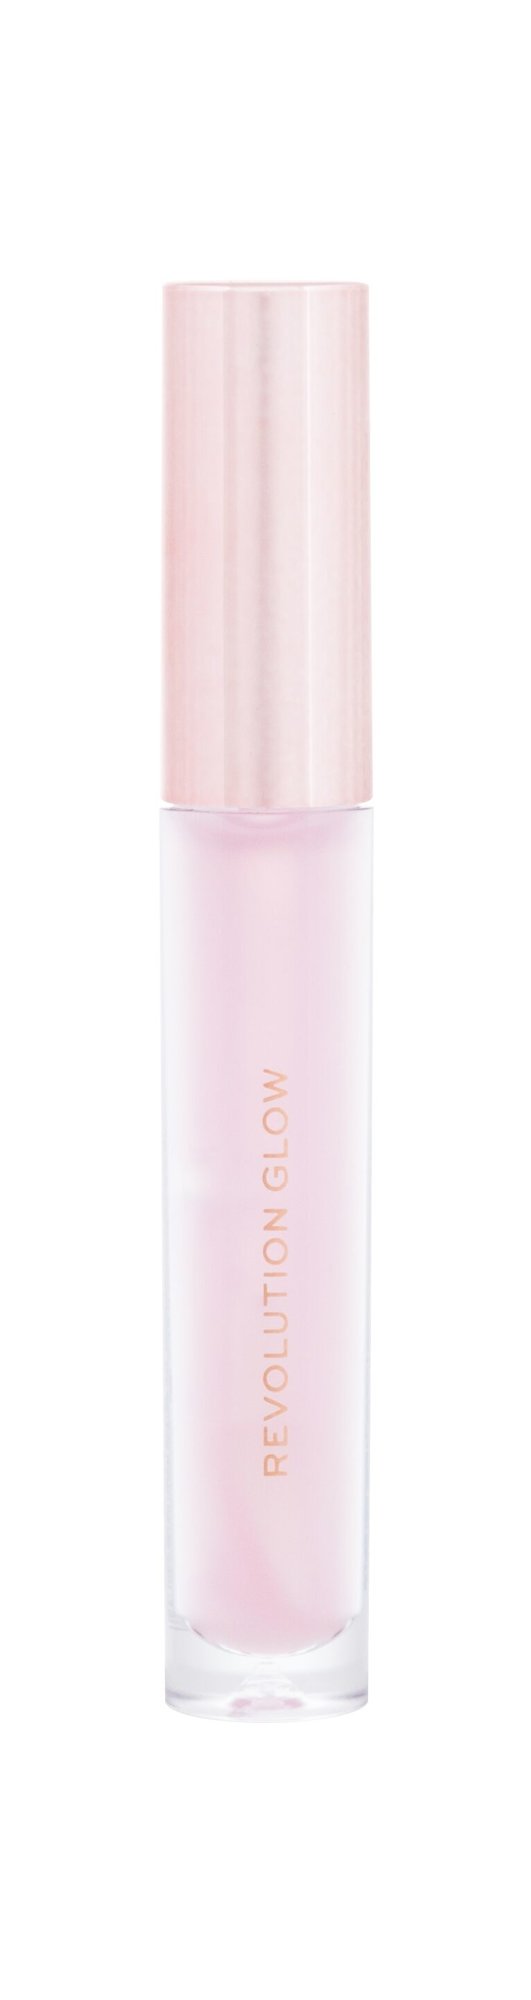 Makeup Revolution London Glow Lip Serum 3,6ml lūpų balzamas